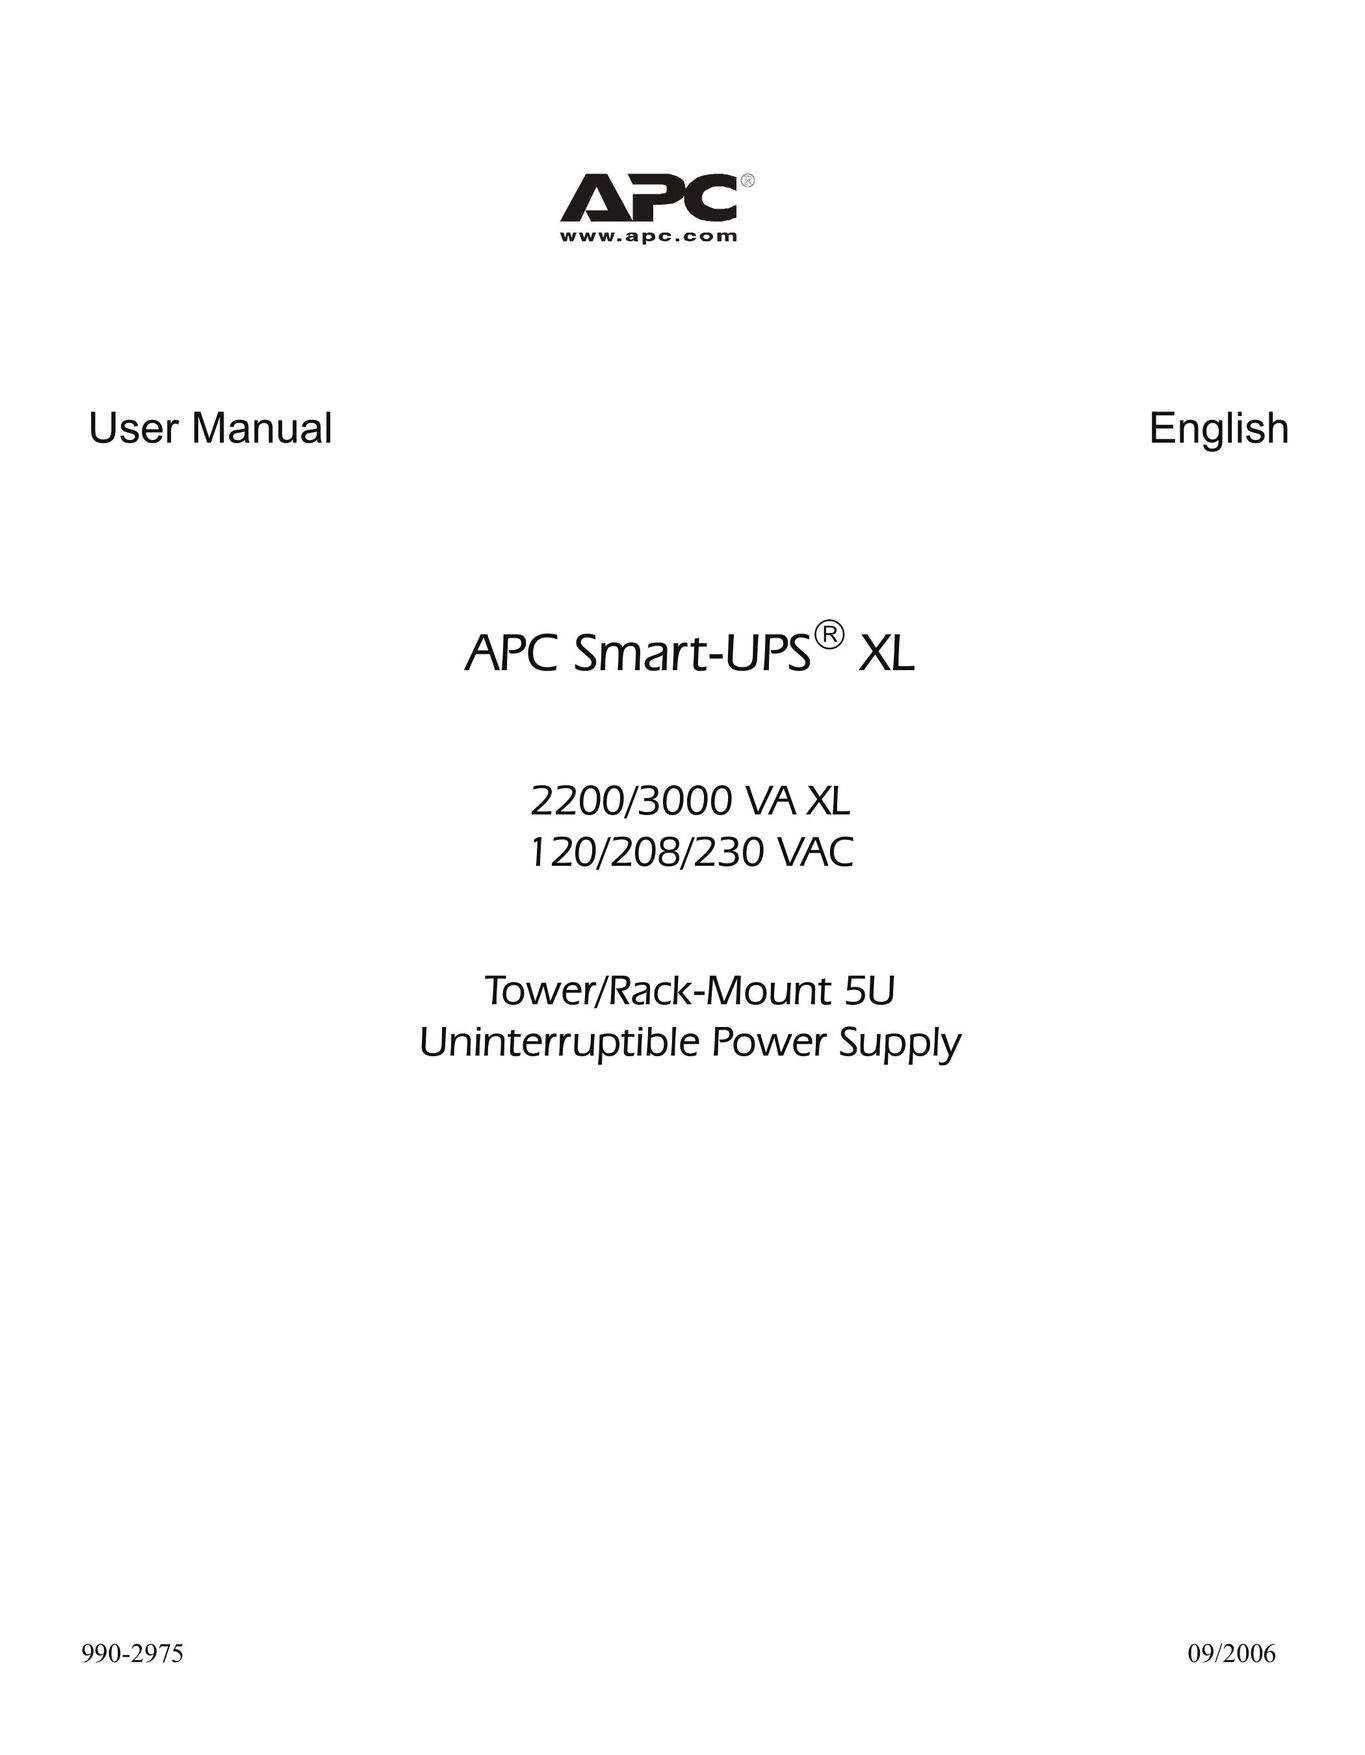 American Power Conversion 2200 VA XL Power Supply User Manual